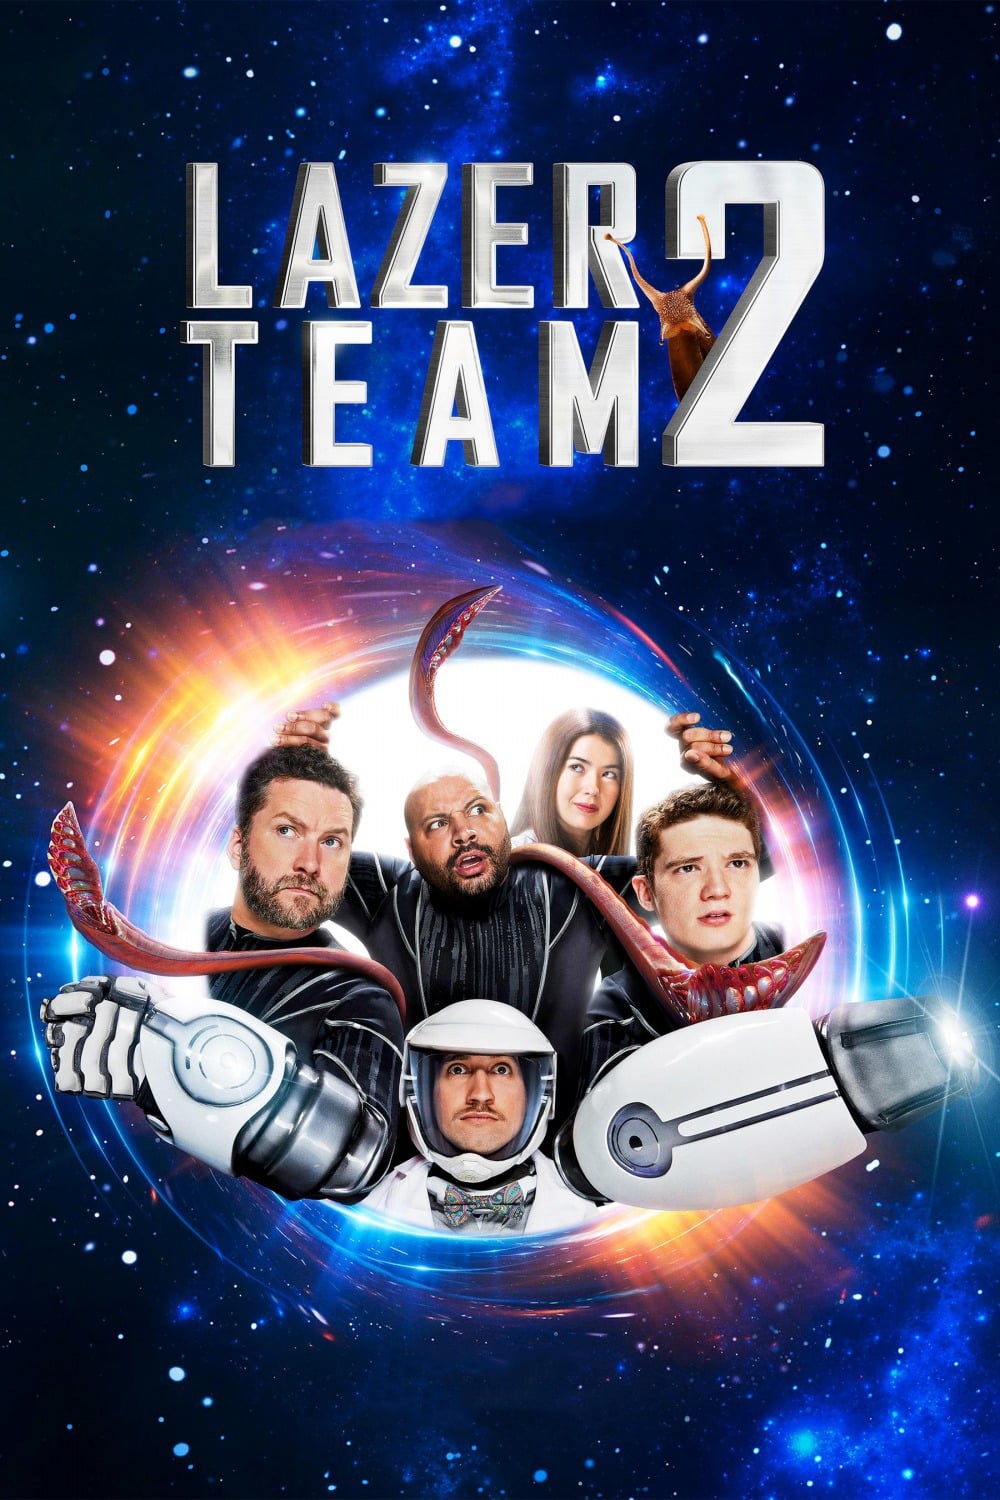 Lazer Team 2 film